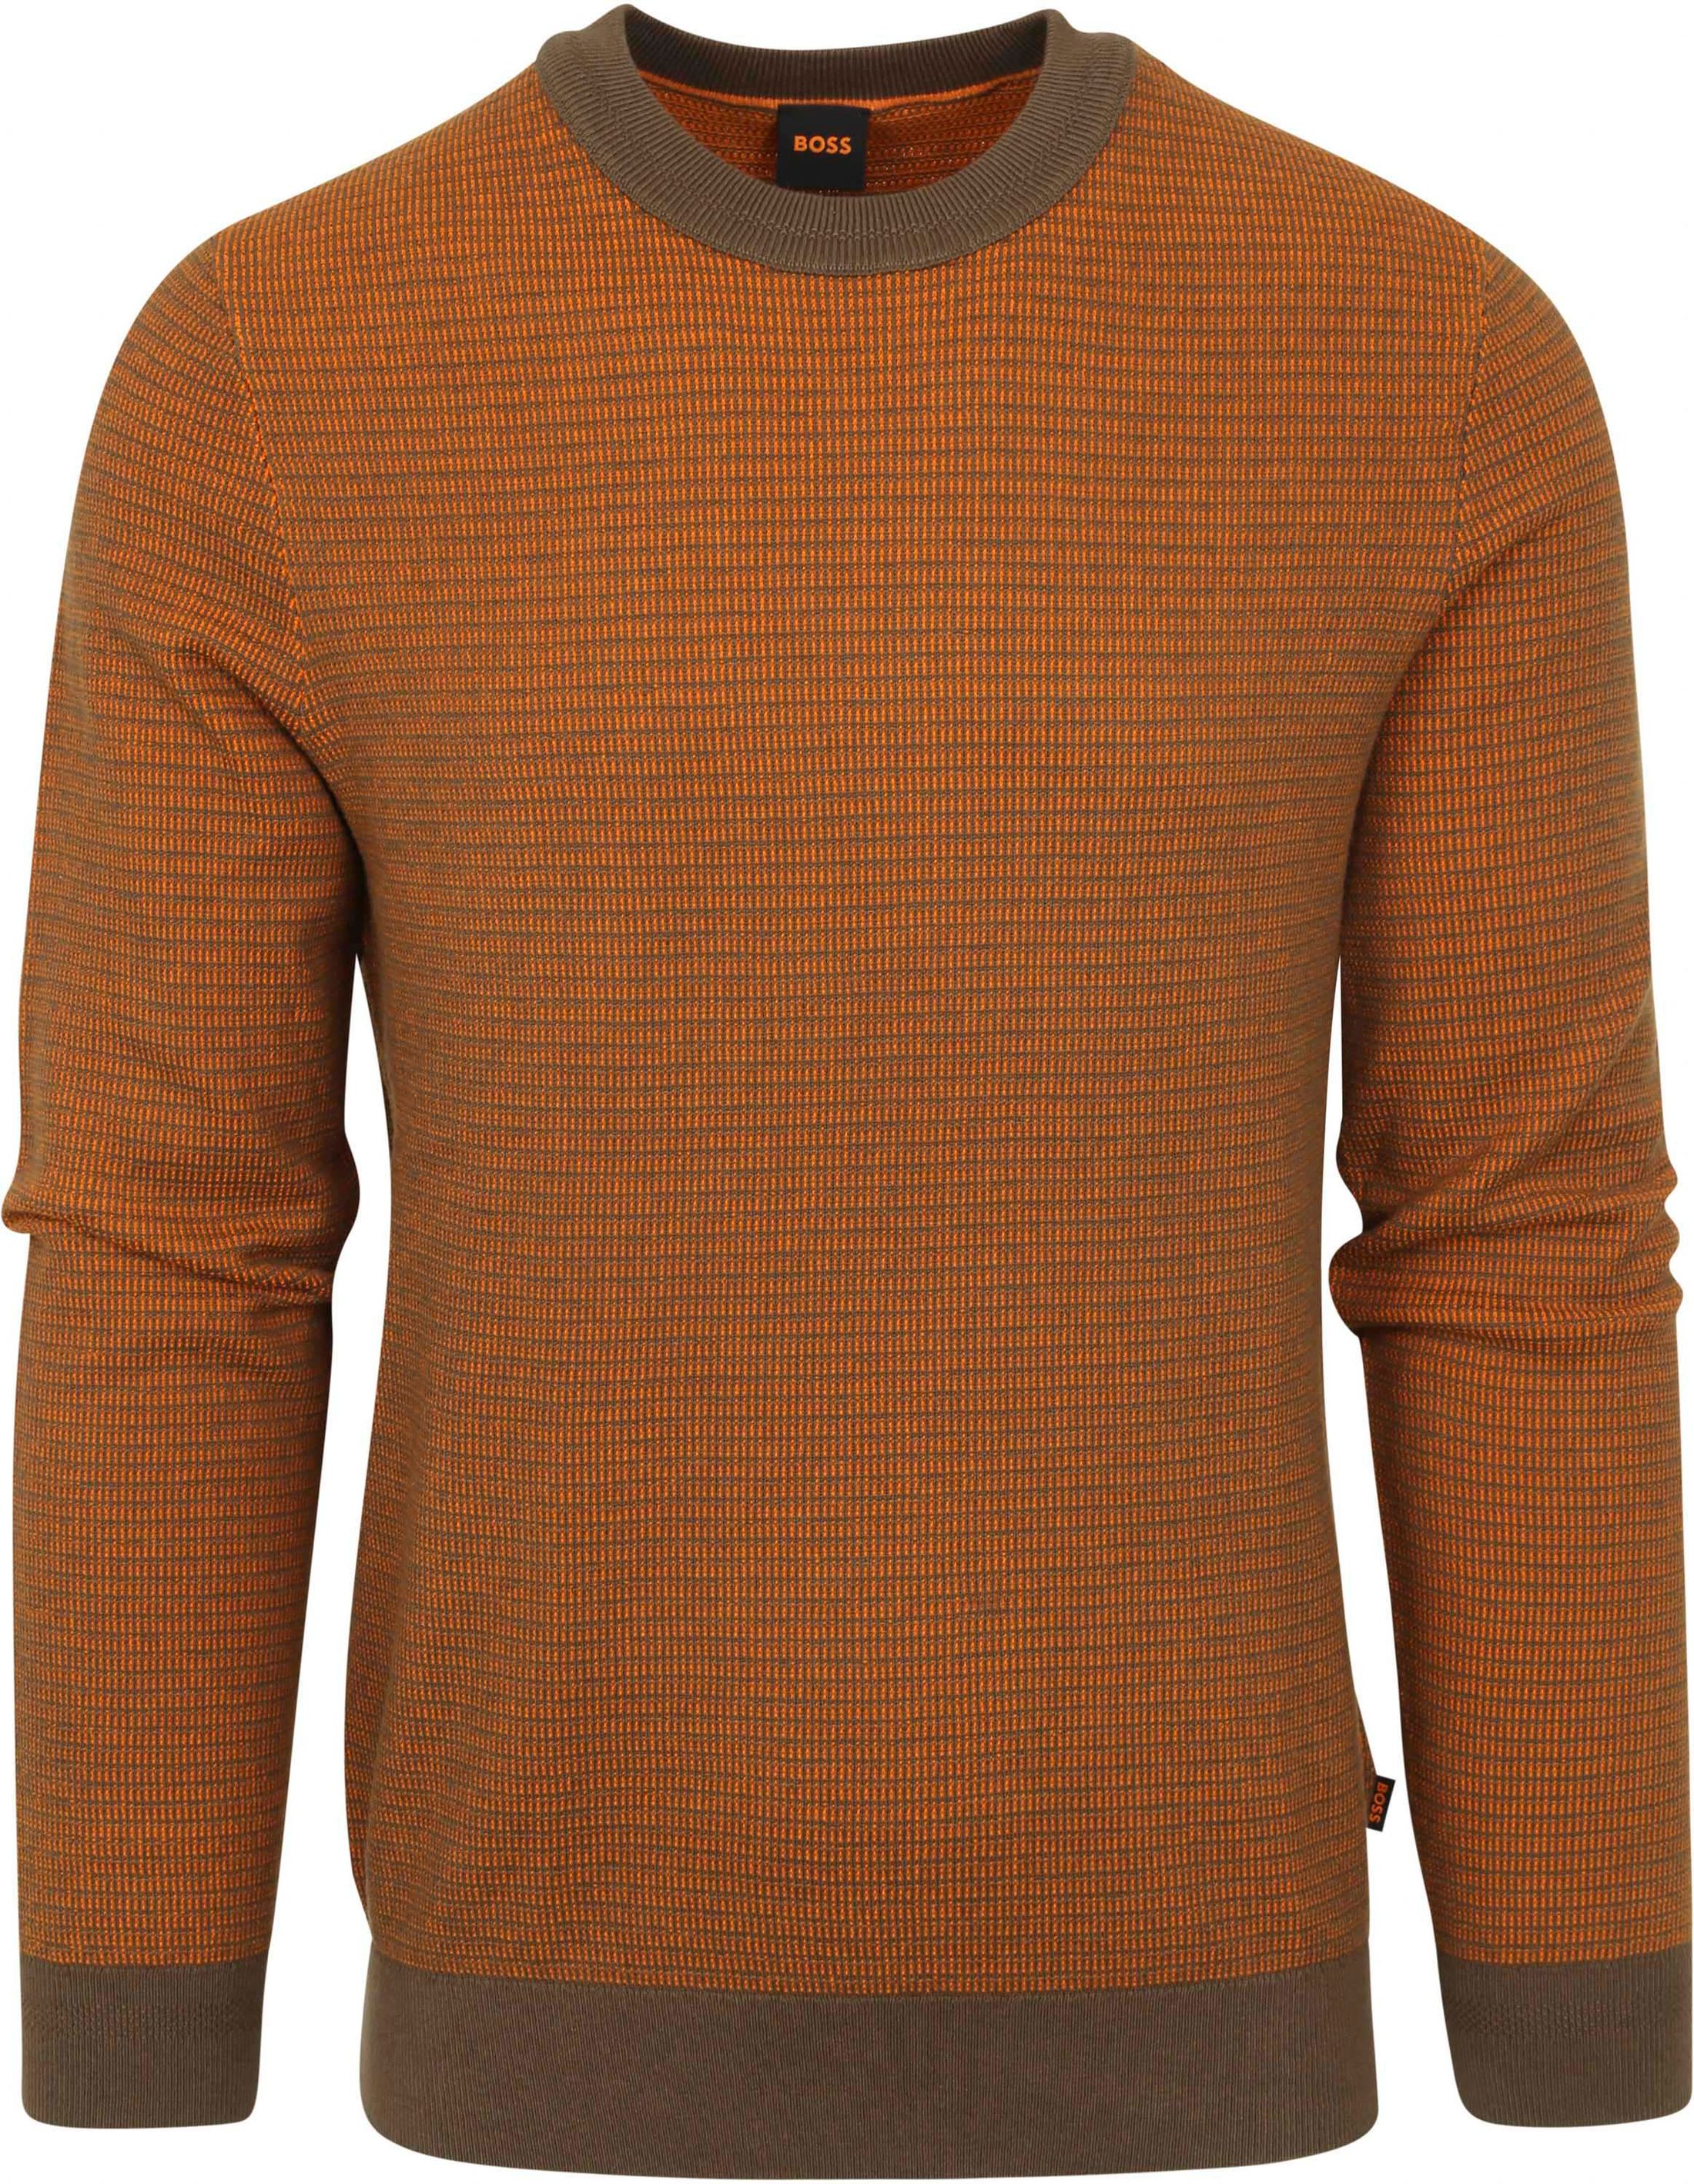 Hugo Boss Avobano Pullover Khaki Orange size 3XL